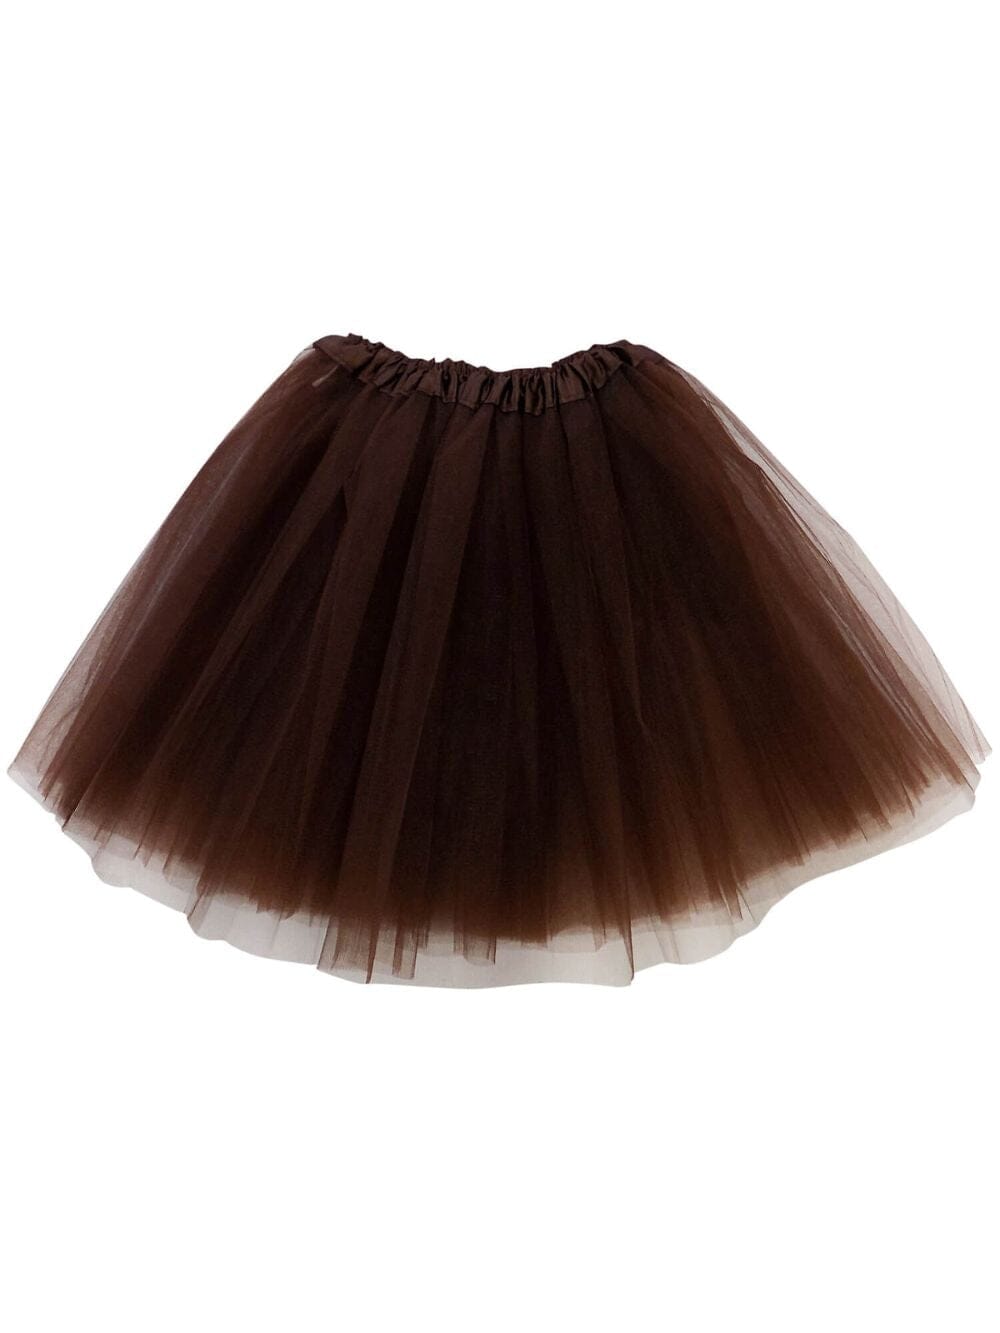 Brown Plus Size Adult Tutu Skirt - Women's Plus Size 3- Layer Basic Ballet Costume Dance Tutus - Sydney So Sweet